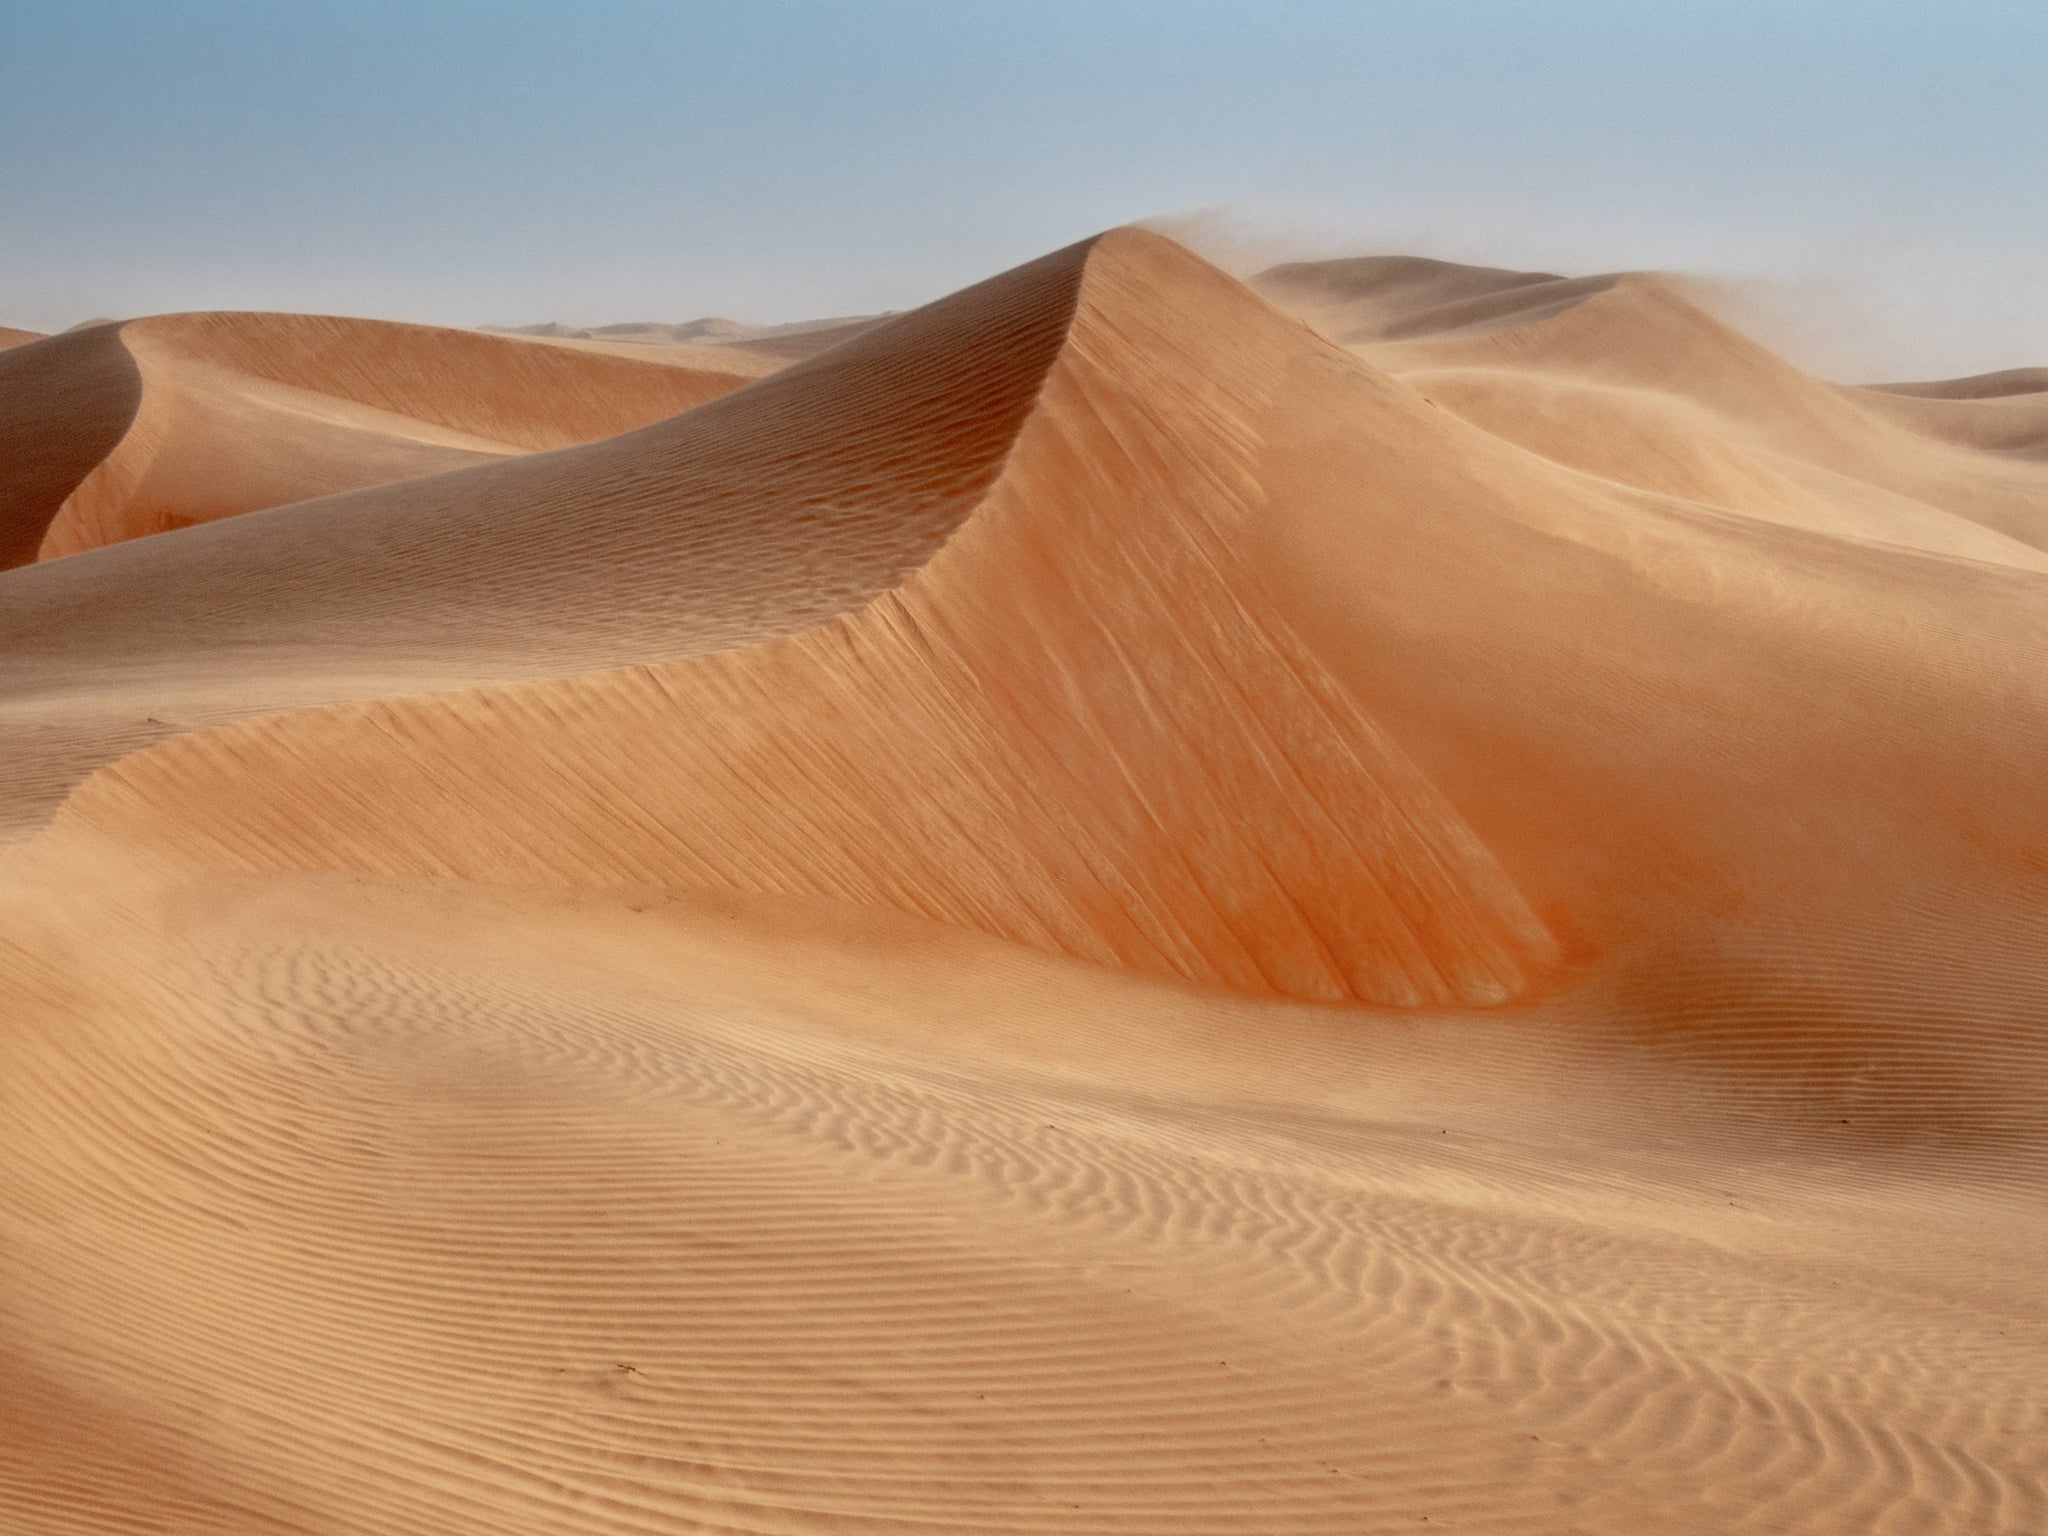 Image of a desert, sand dunes